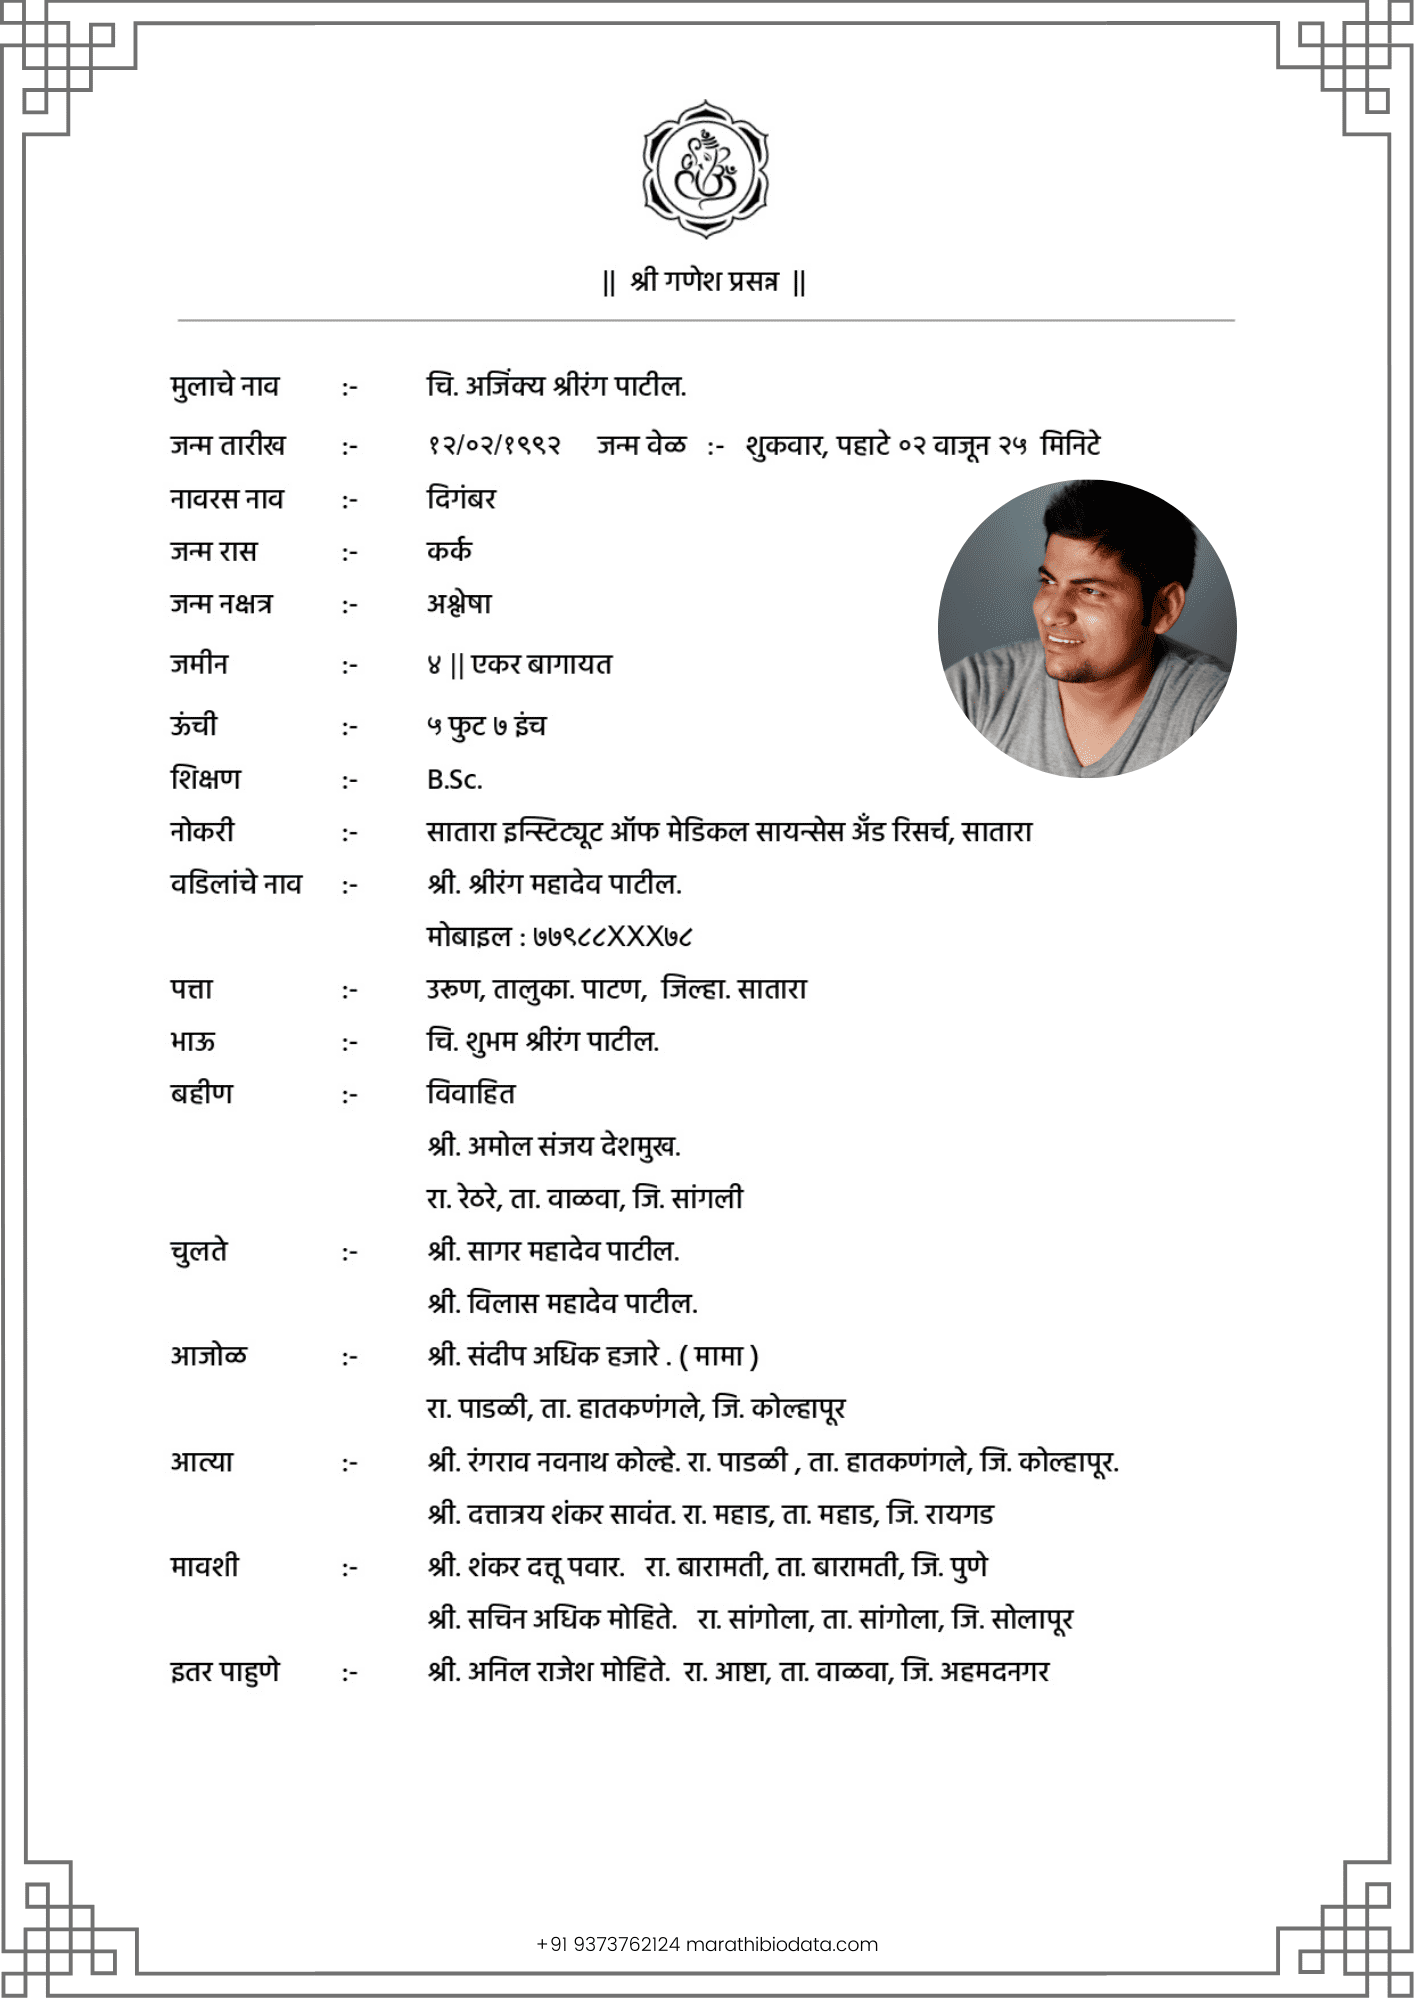 resume format marathi pdf